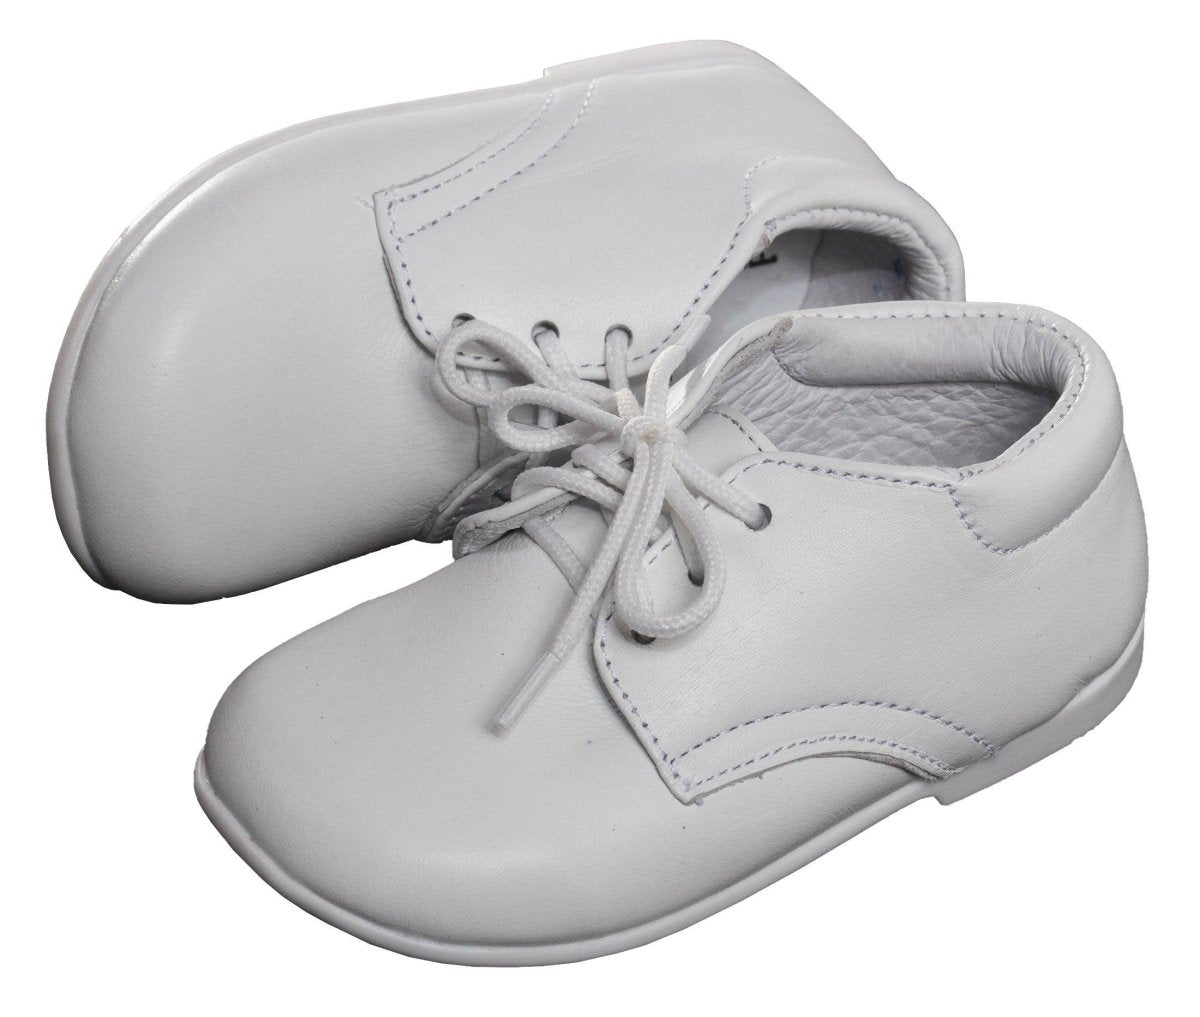 Infant White Round Toe Dress Shoe Lace Up - Noah - Tuxgear